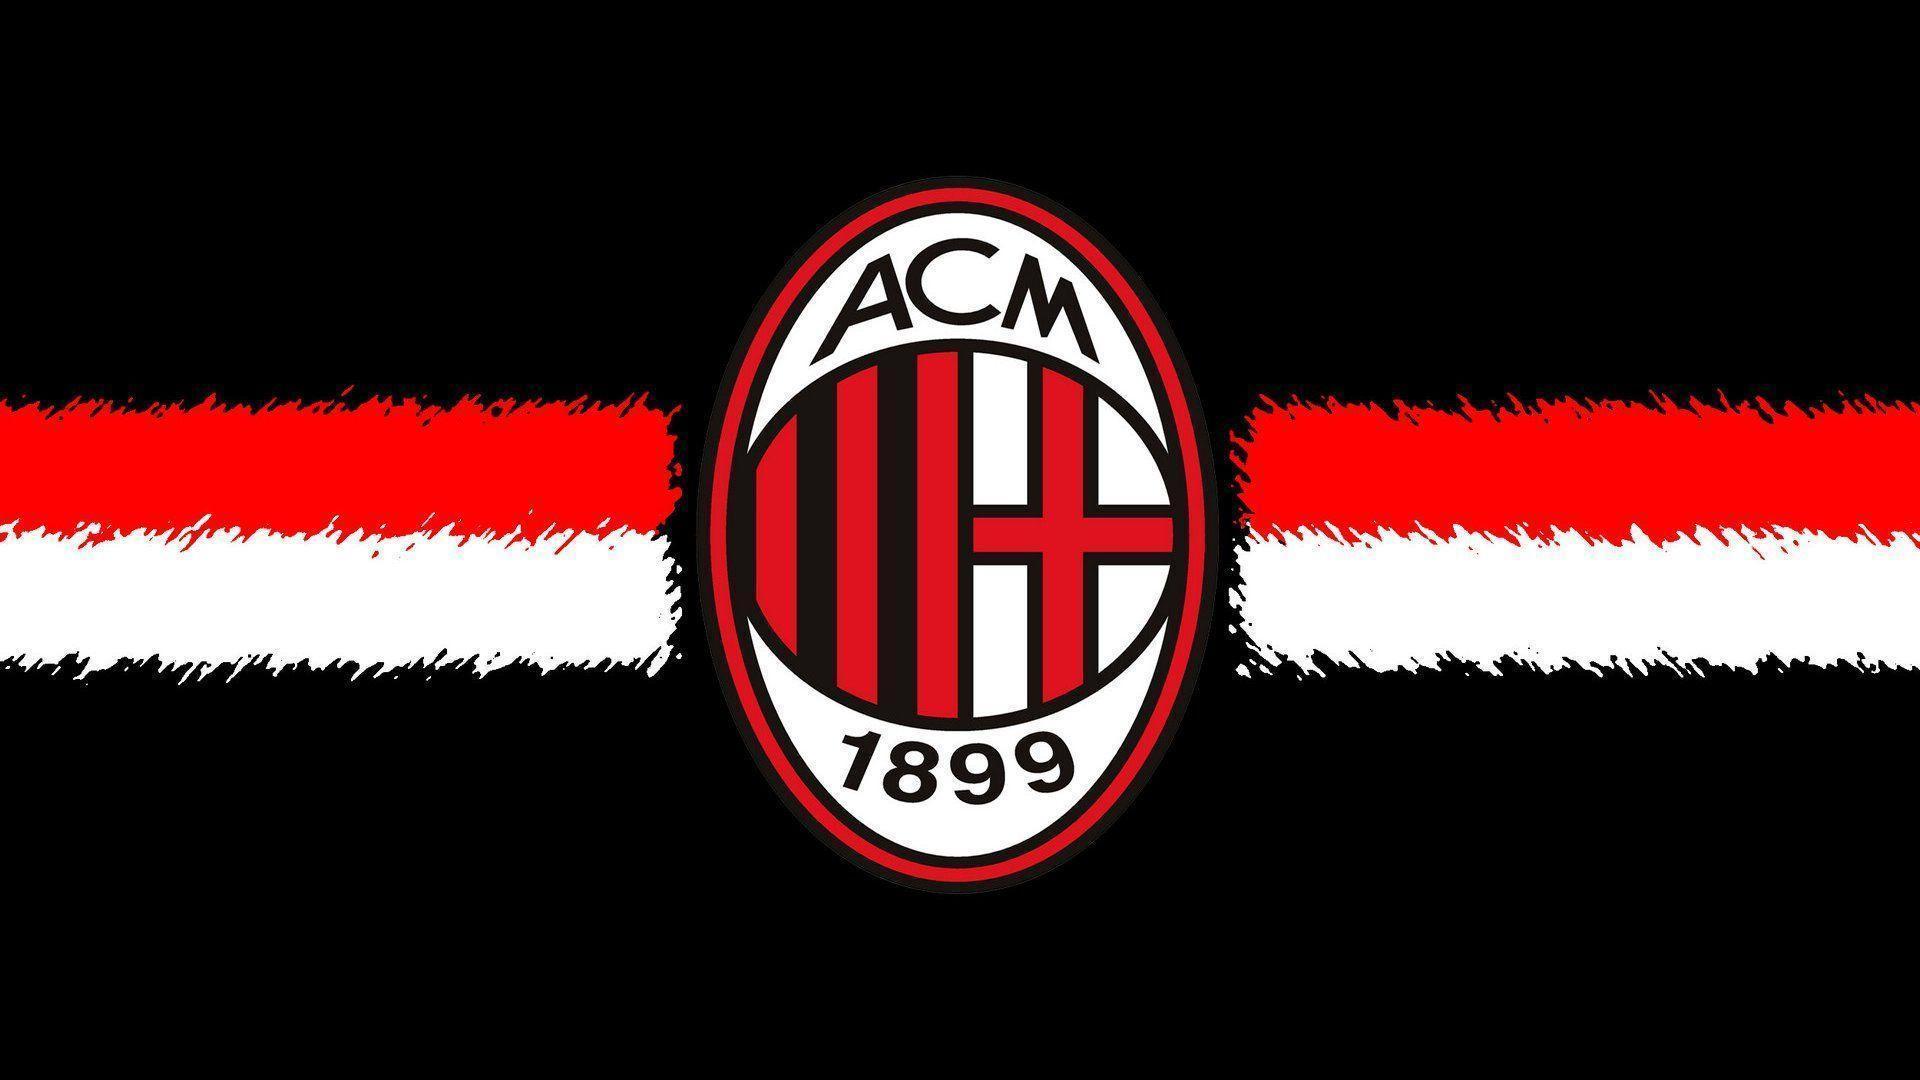 Fondos de AC Milan